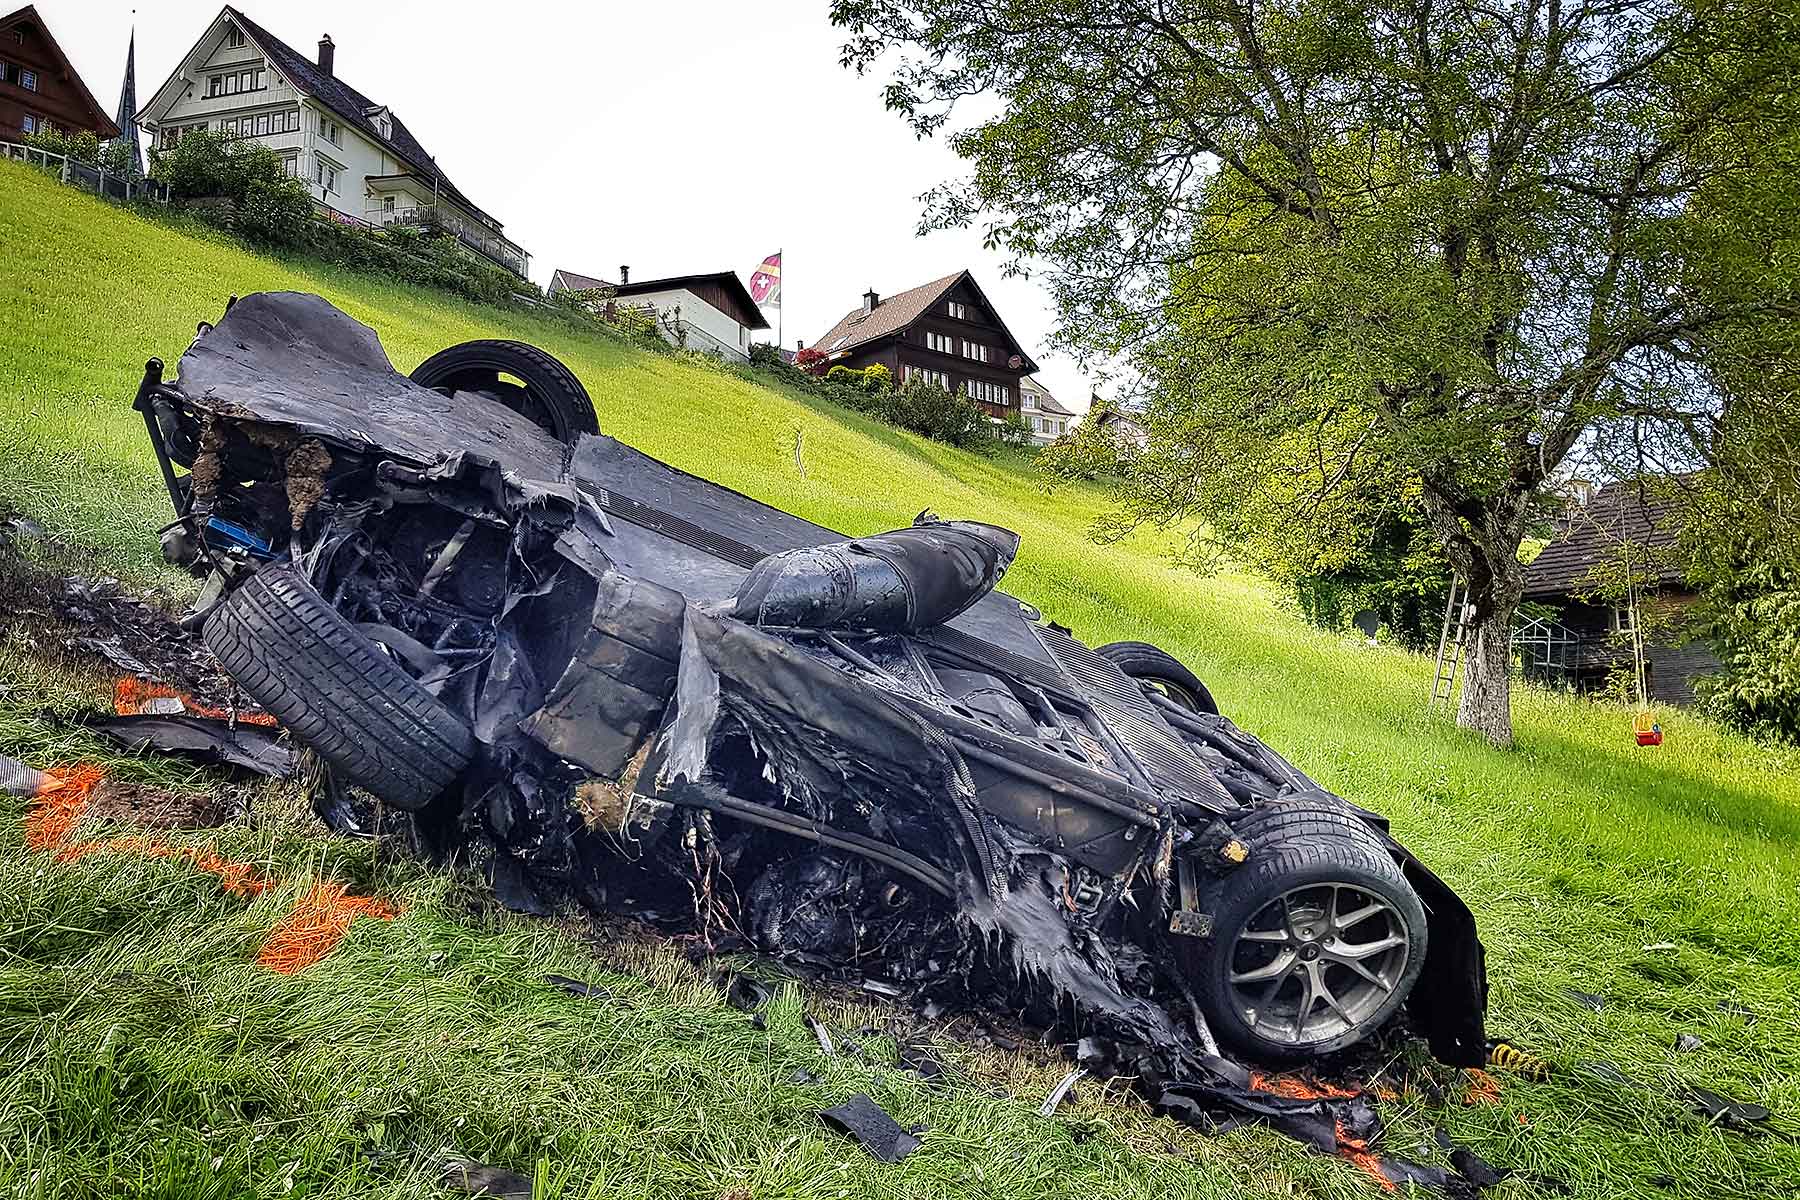 Richard Hammond Rimac supercar crash